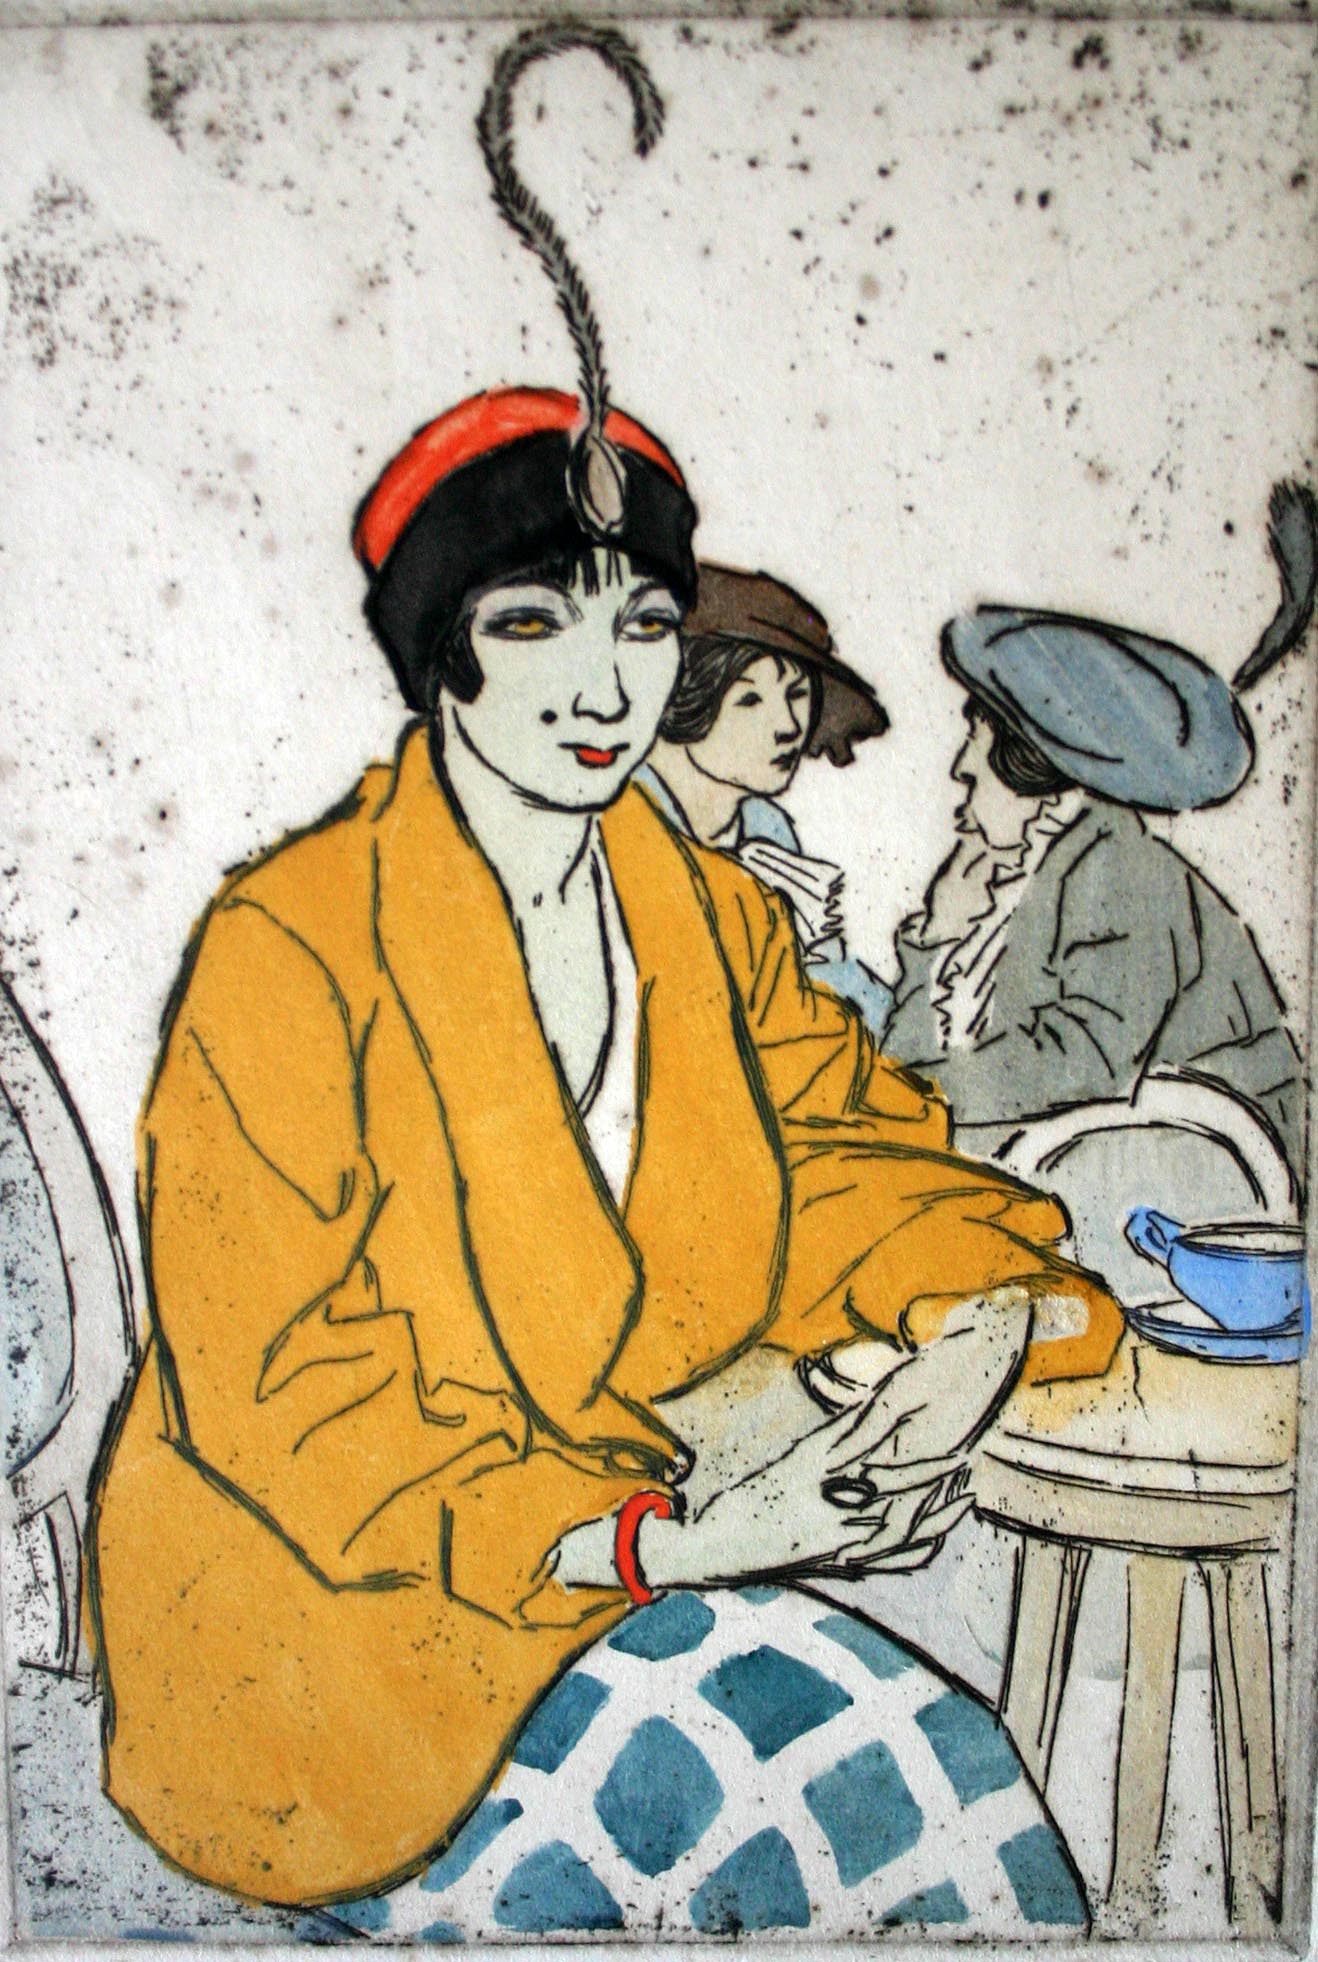 Tocque de 1912 by Maud Squire